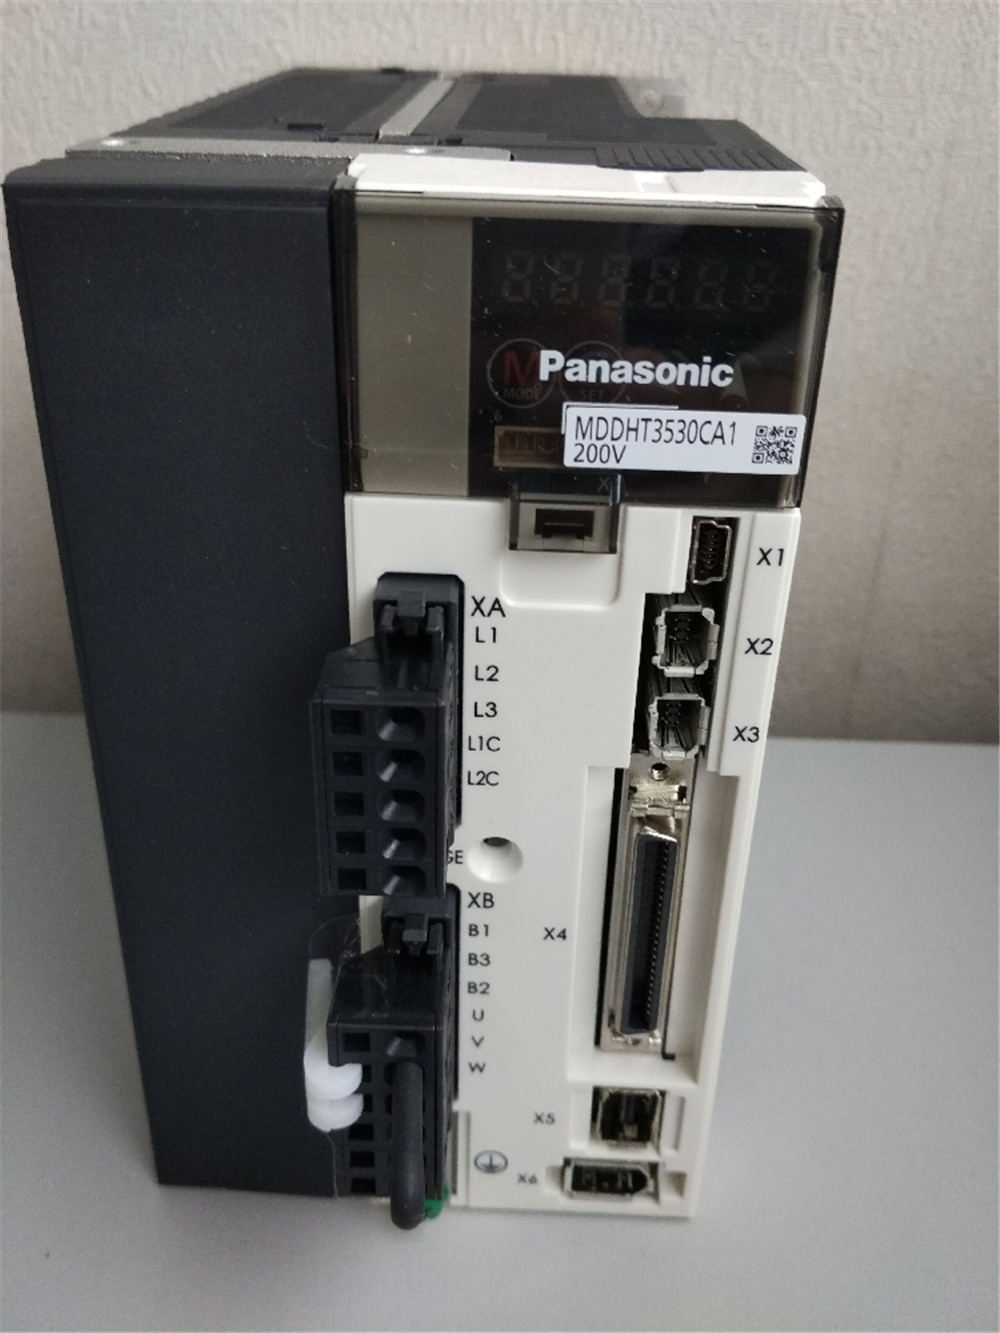 NEW PANASONIC Servo drive MDDHT3530CA1 in box - Click Image to Close